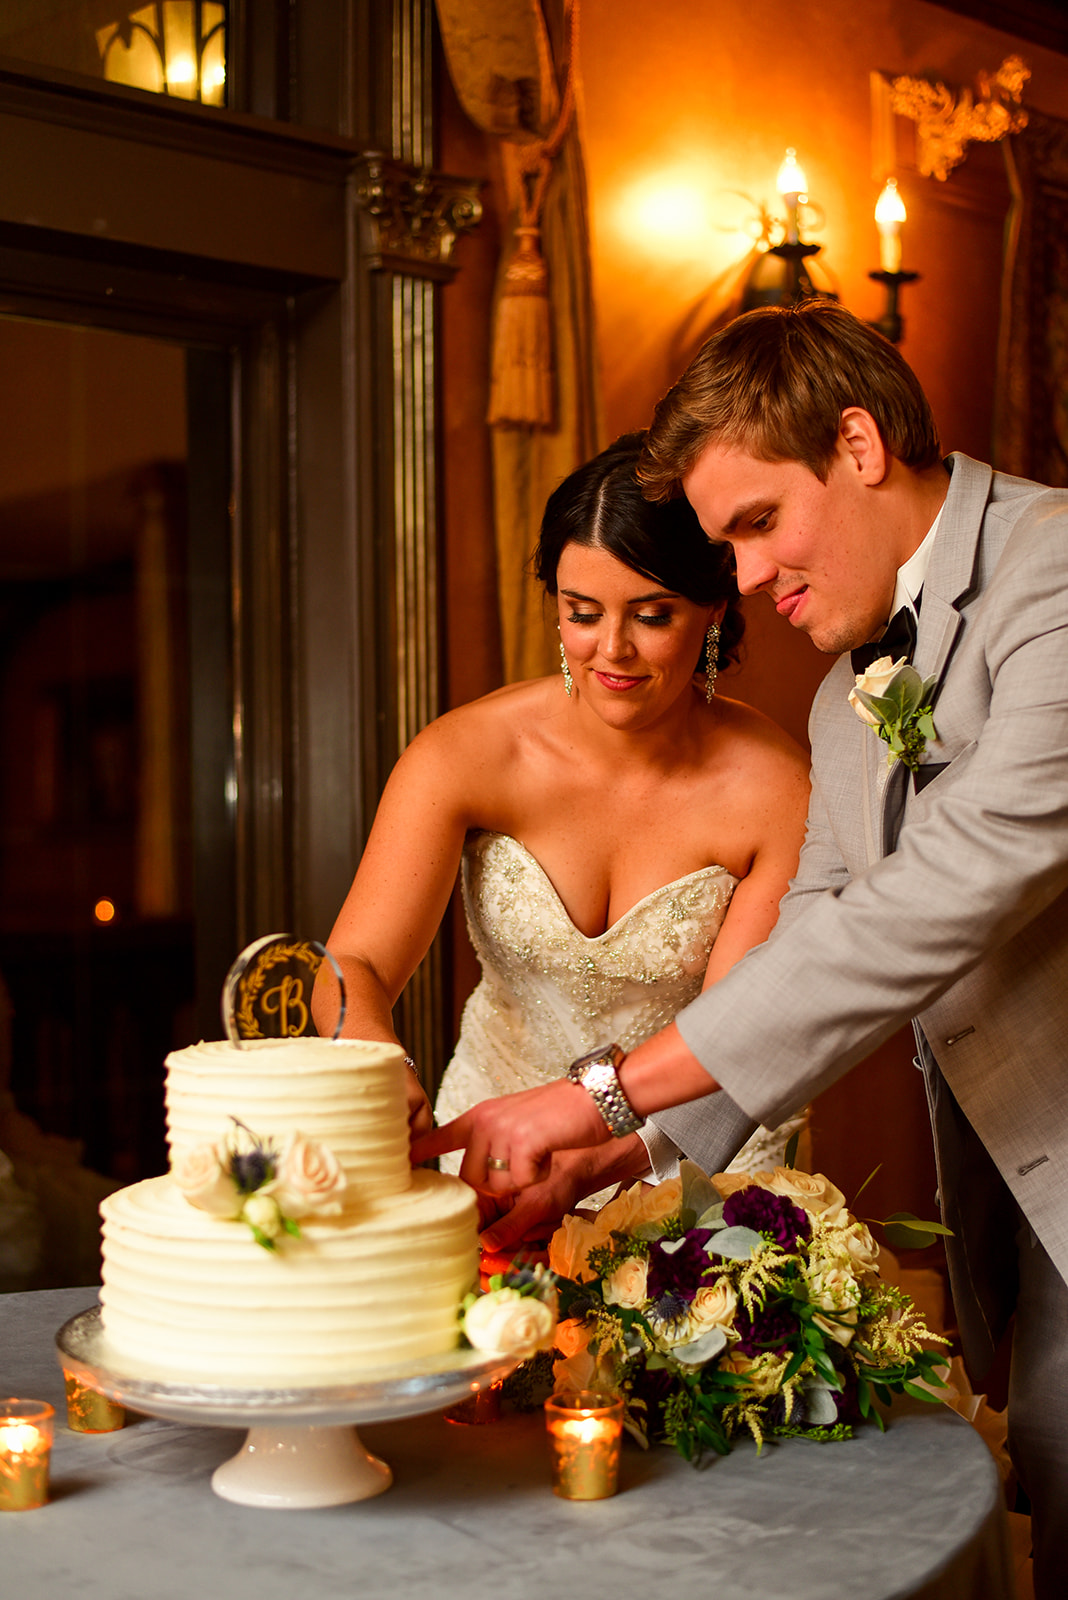 Timeless Love Weddings | Fairytale Barclay Villa Wedding | Cake Cutting